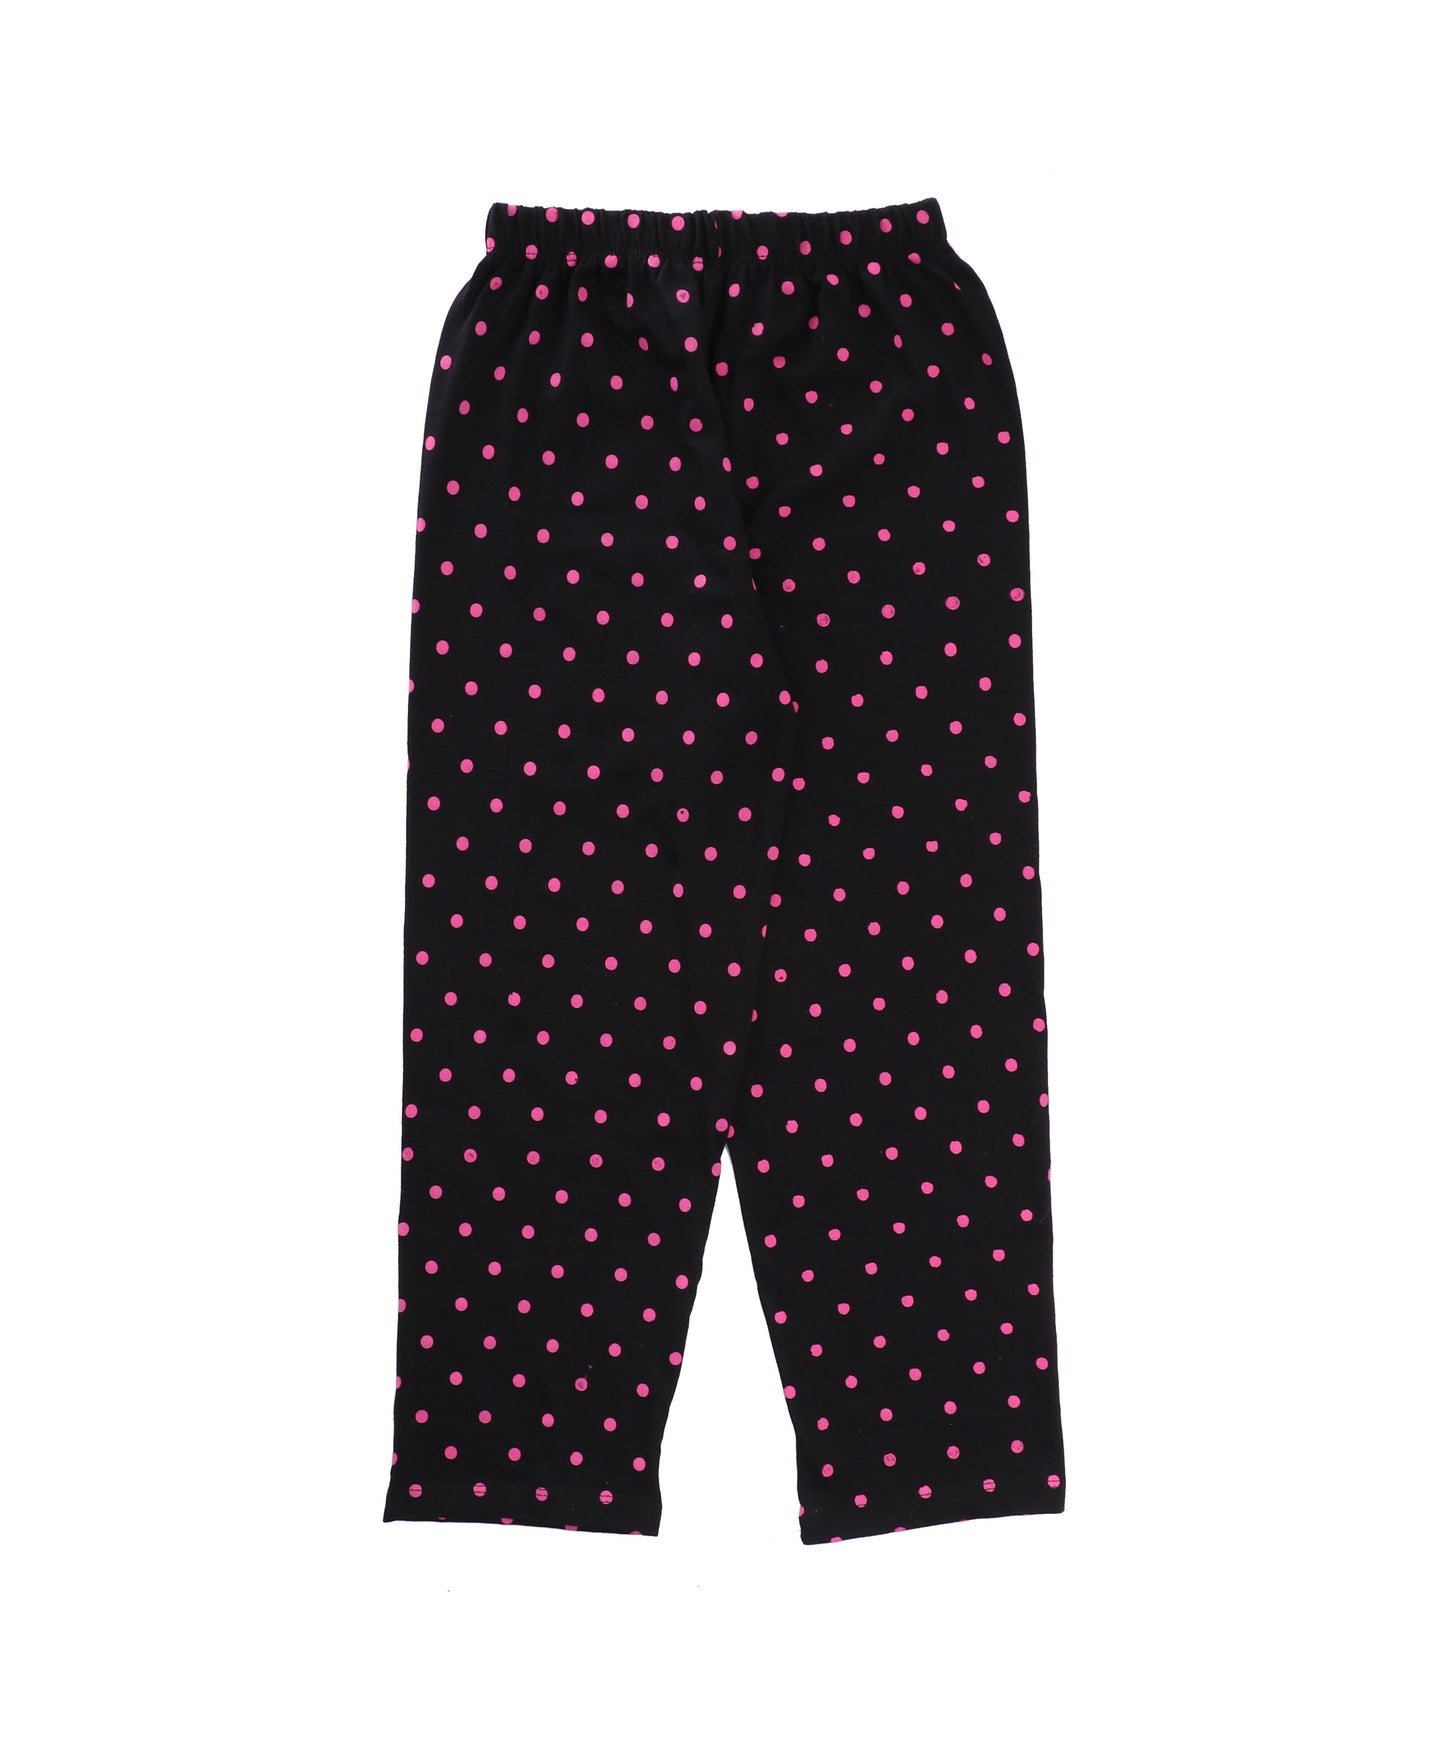 Black & Red Dots Printed Pyjamas for Girls